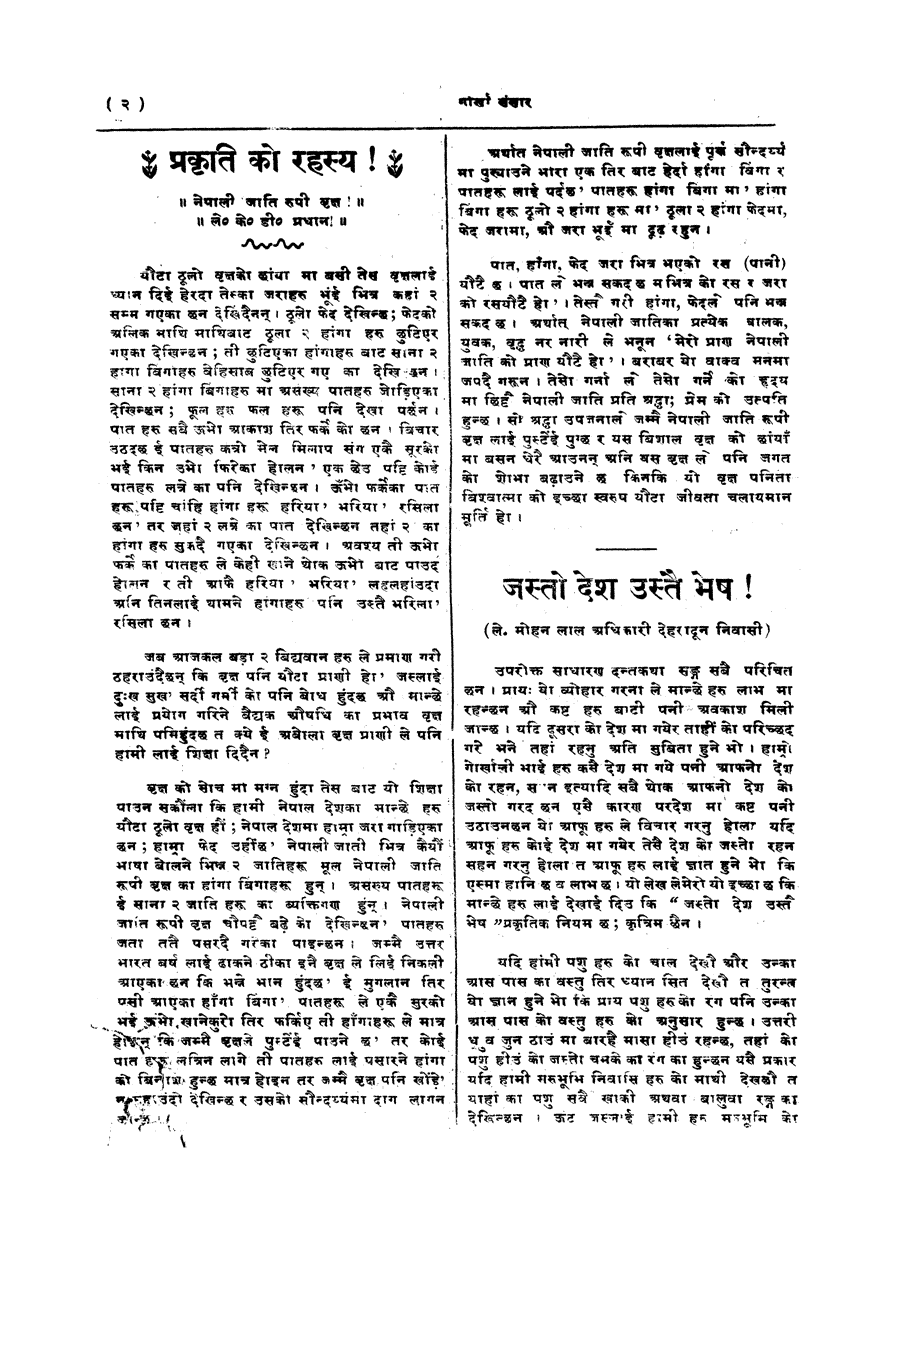 Gorkha Sansar, 15 June 1928, page 2